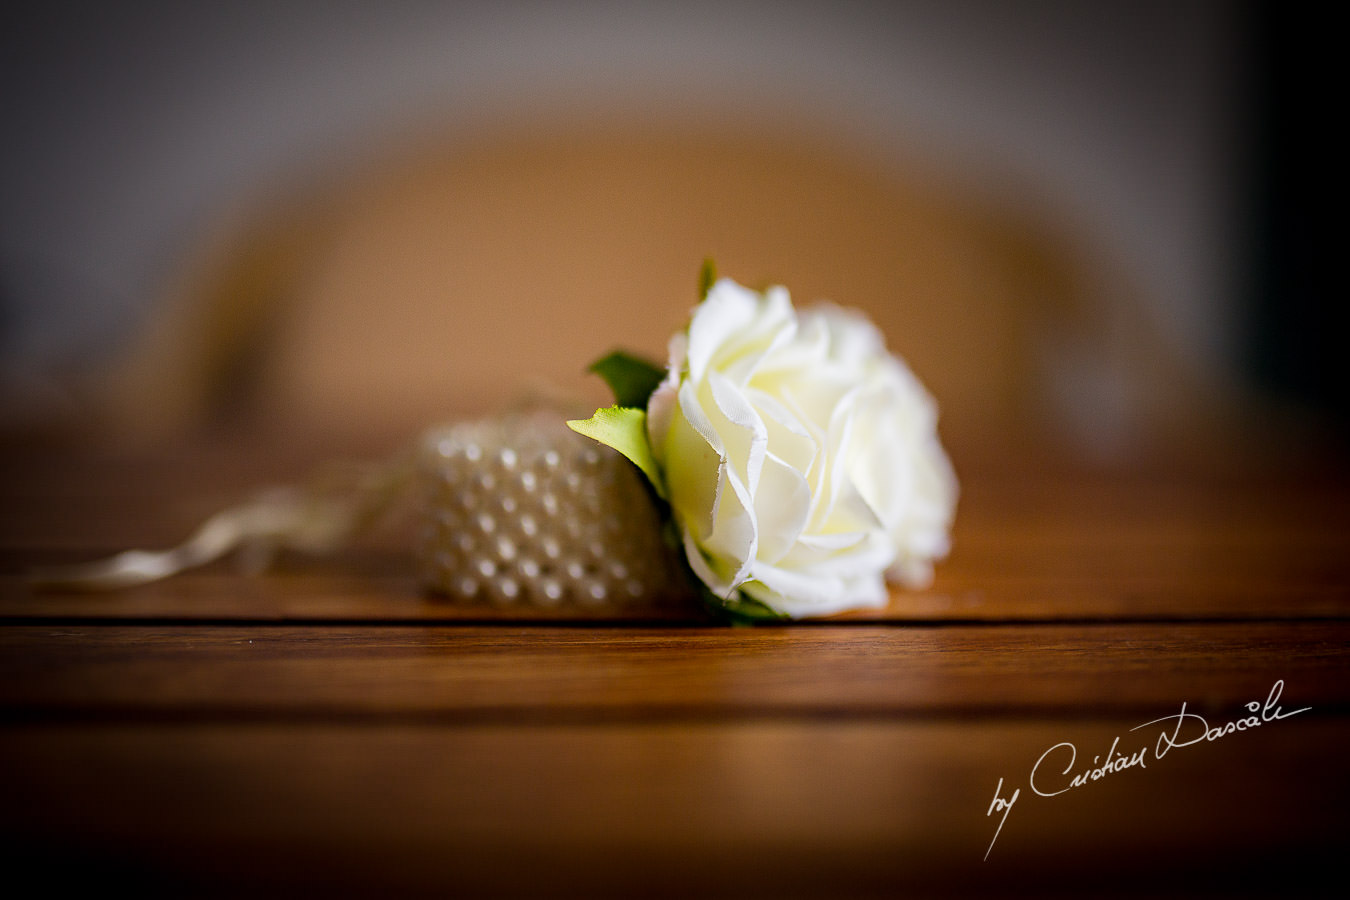 Emotional Wedding at Coral Beach Hotel & Resort. Photography by Cyprus Photographer Cristian Dascalu